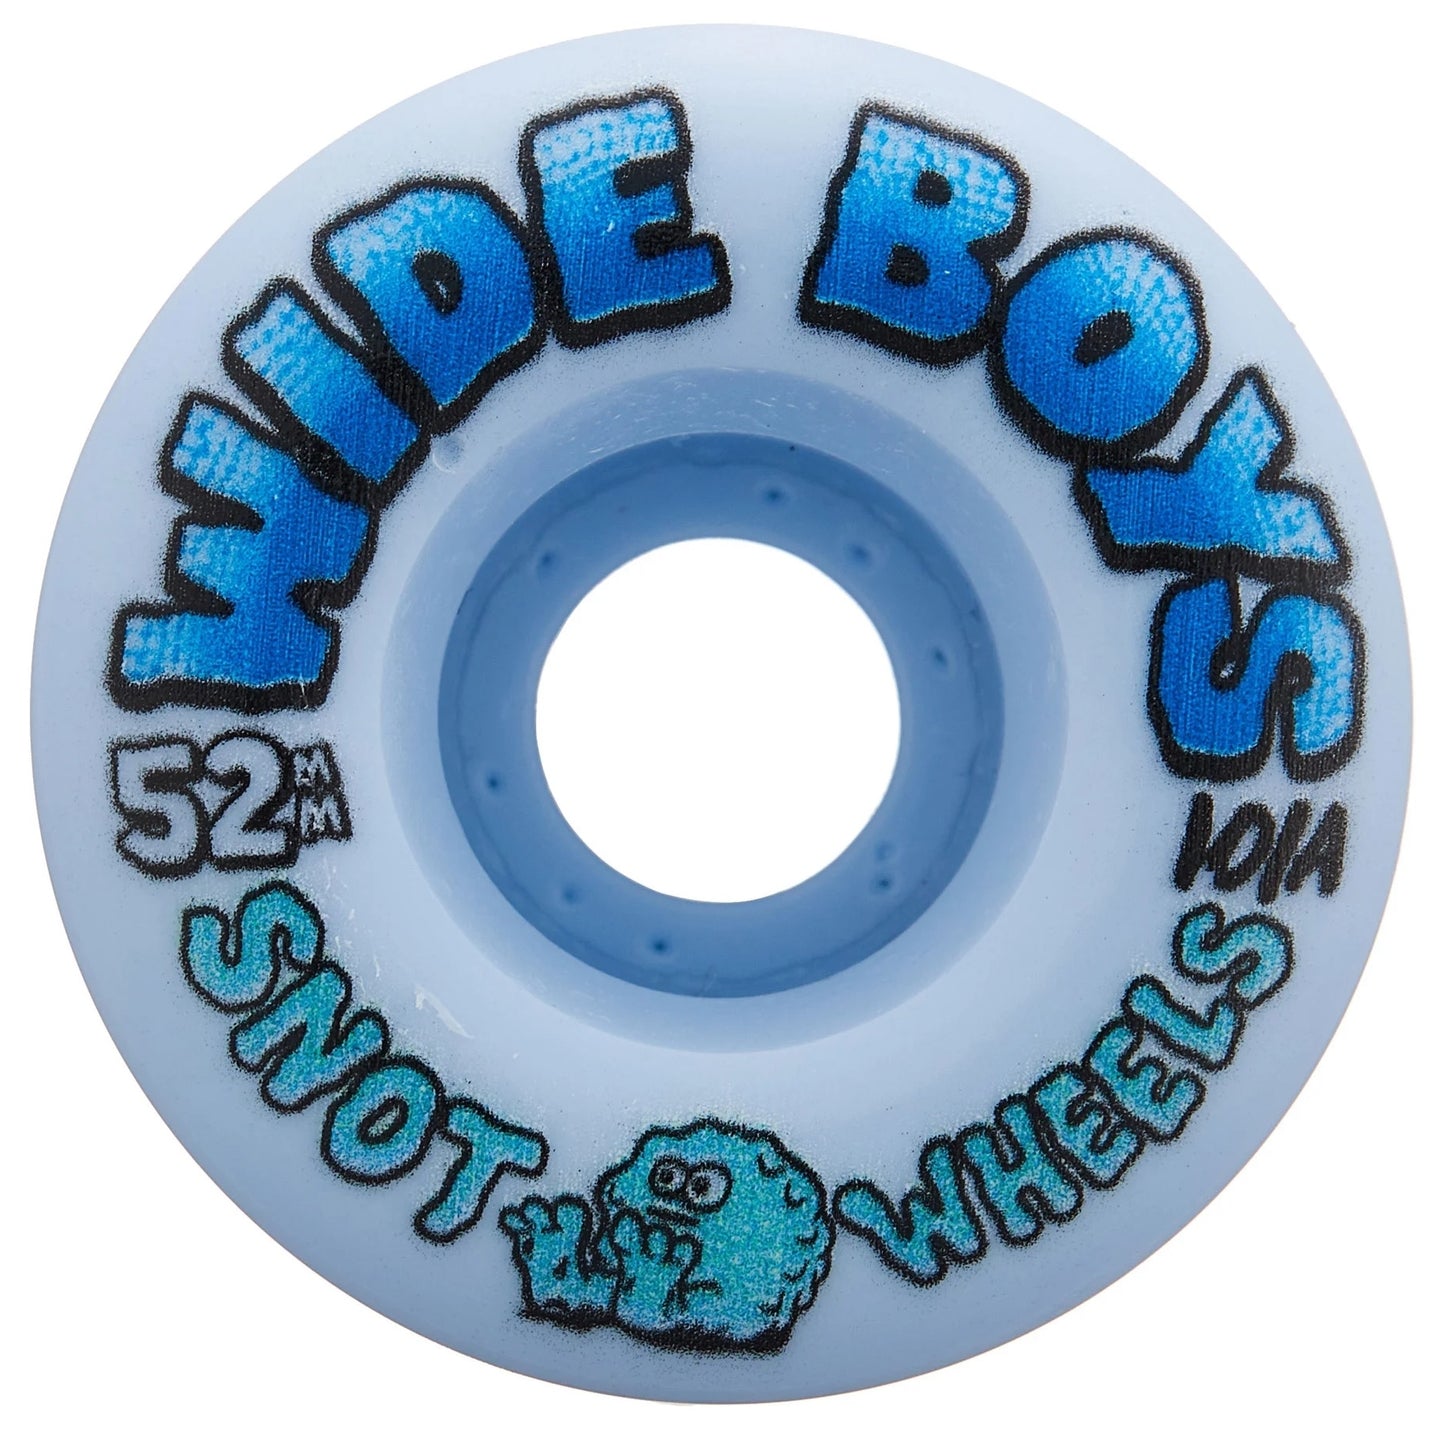 SNOT WIDE BOYS WHEEL 52MM 101A BLUE